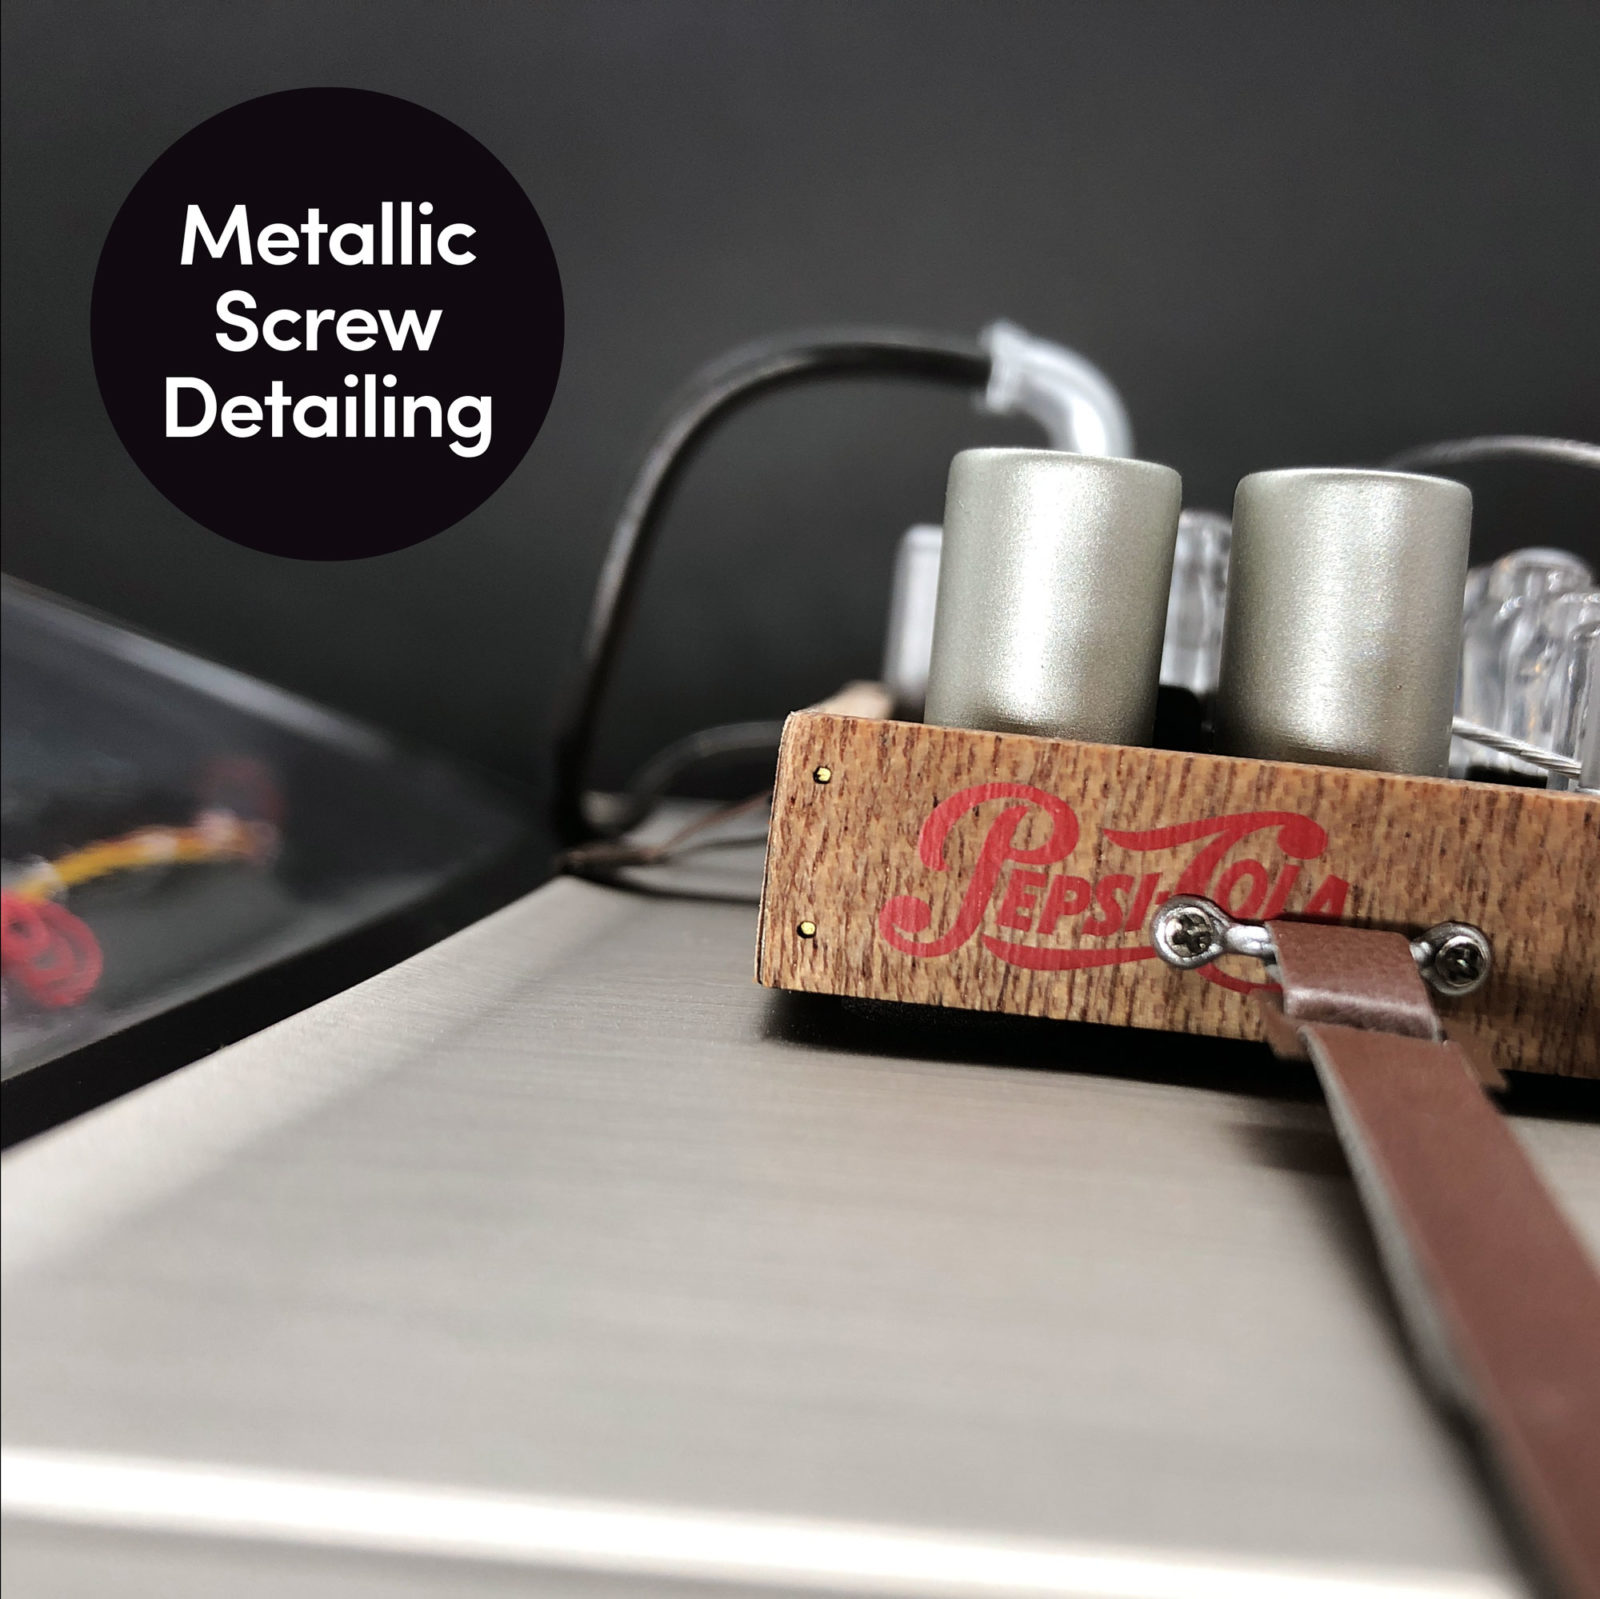 DeLorean Hood Box Upgrade Kit mod's metallic screw detailing